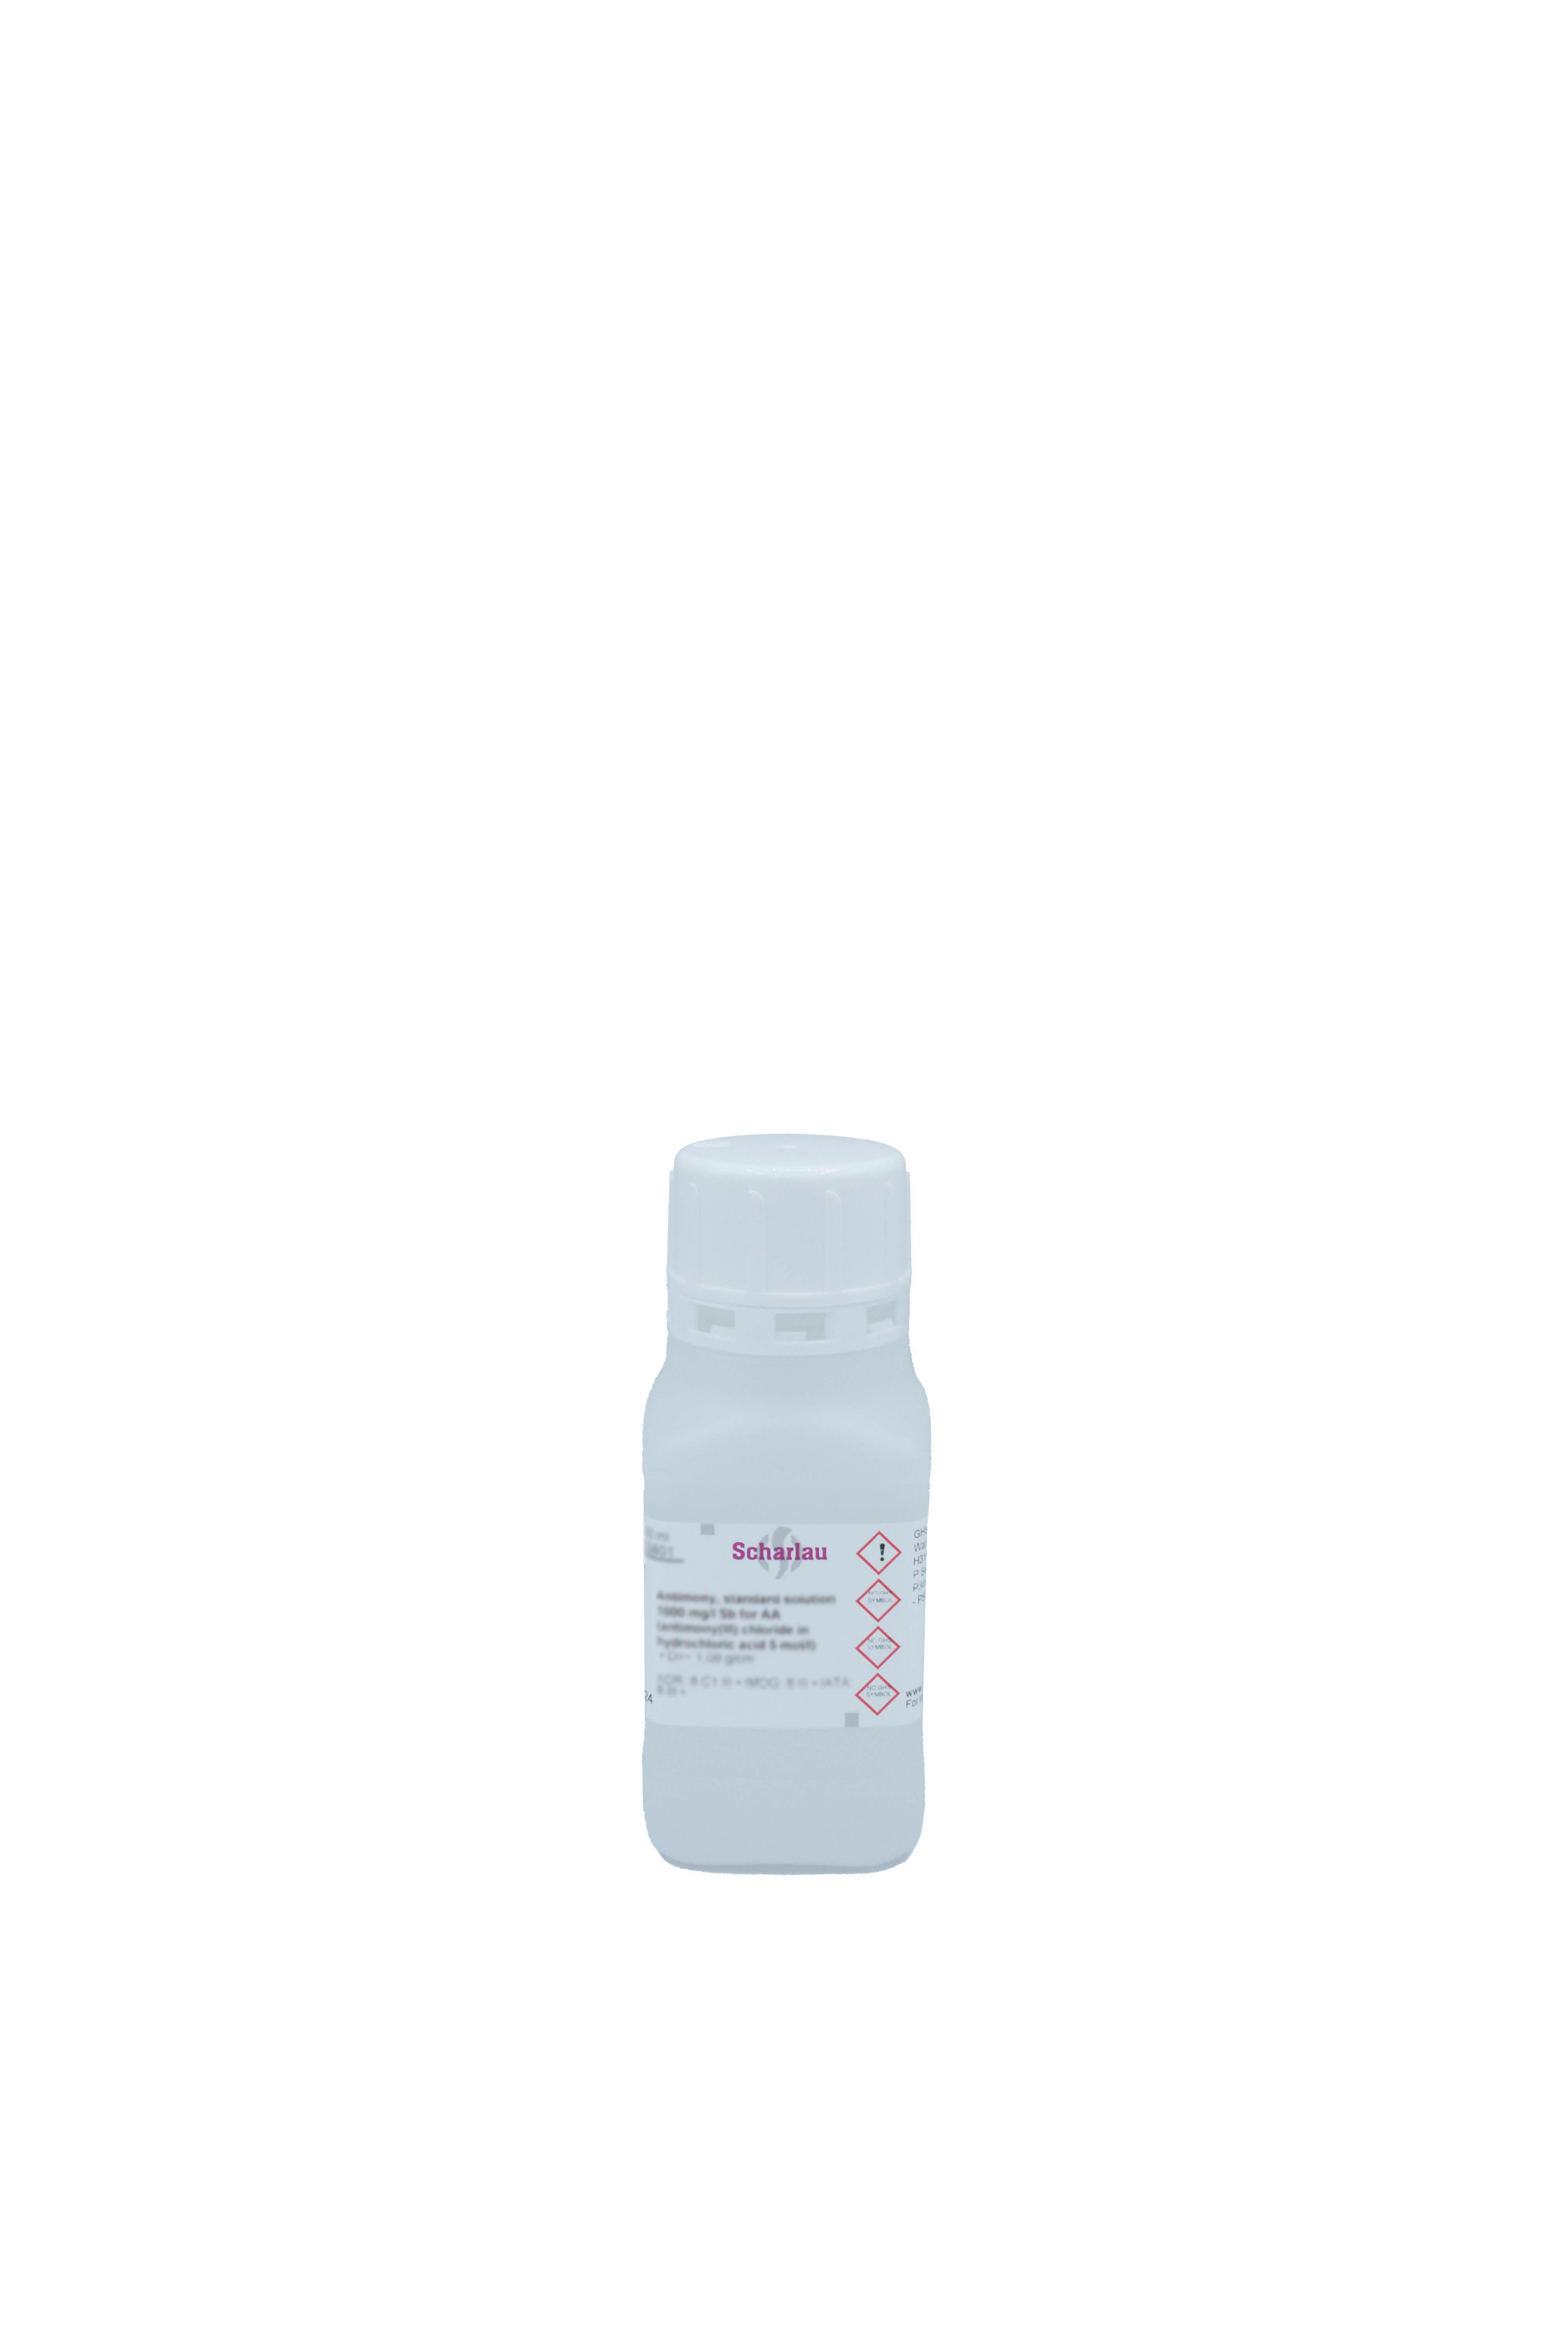 Sodio, solución patrón 1000 mg/l Na para AAs (sodio nitrato en ácido nítrico 0,5 mol/l)